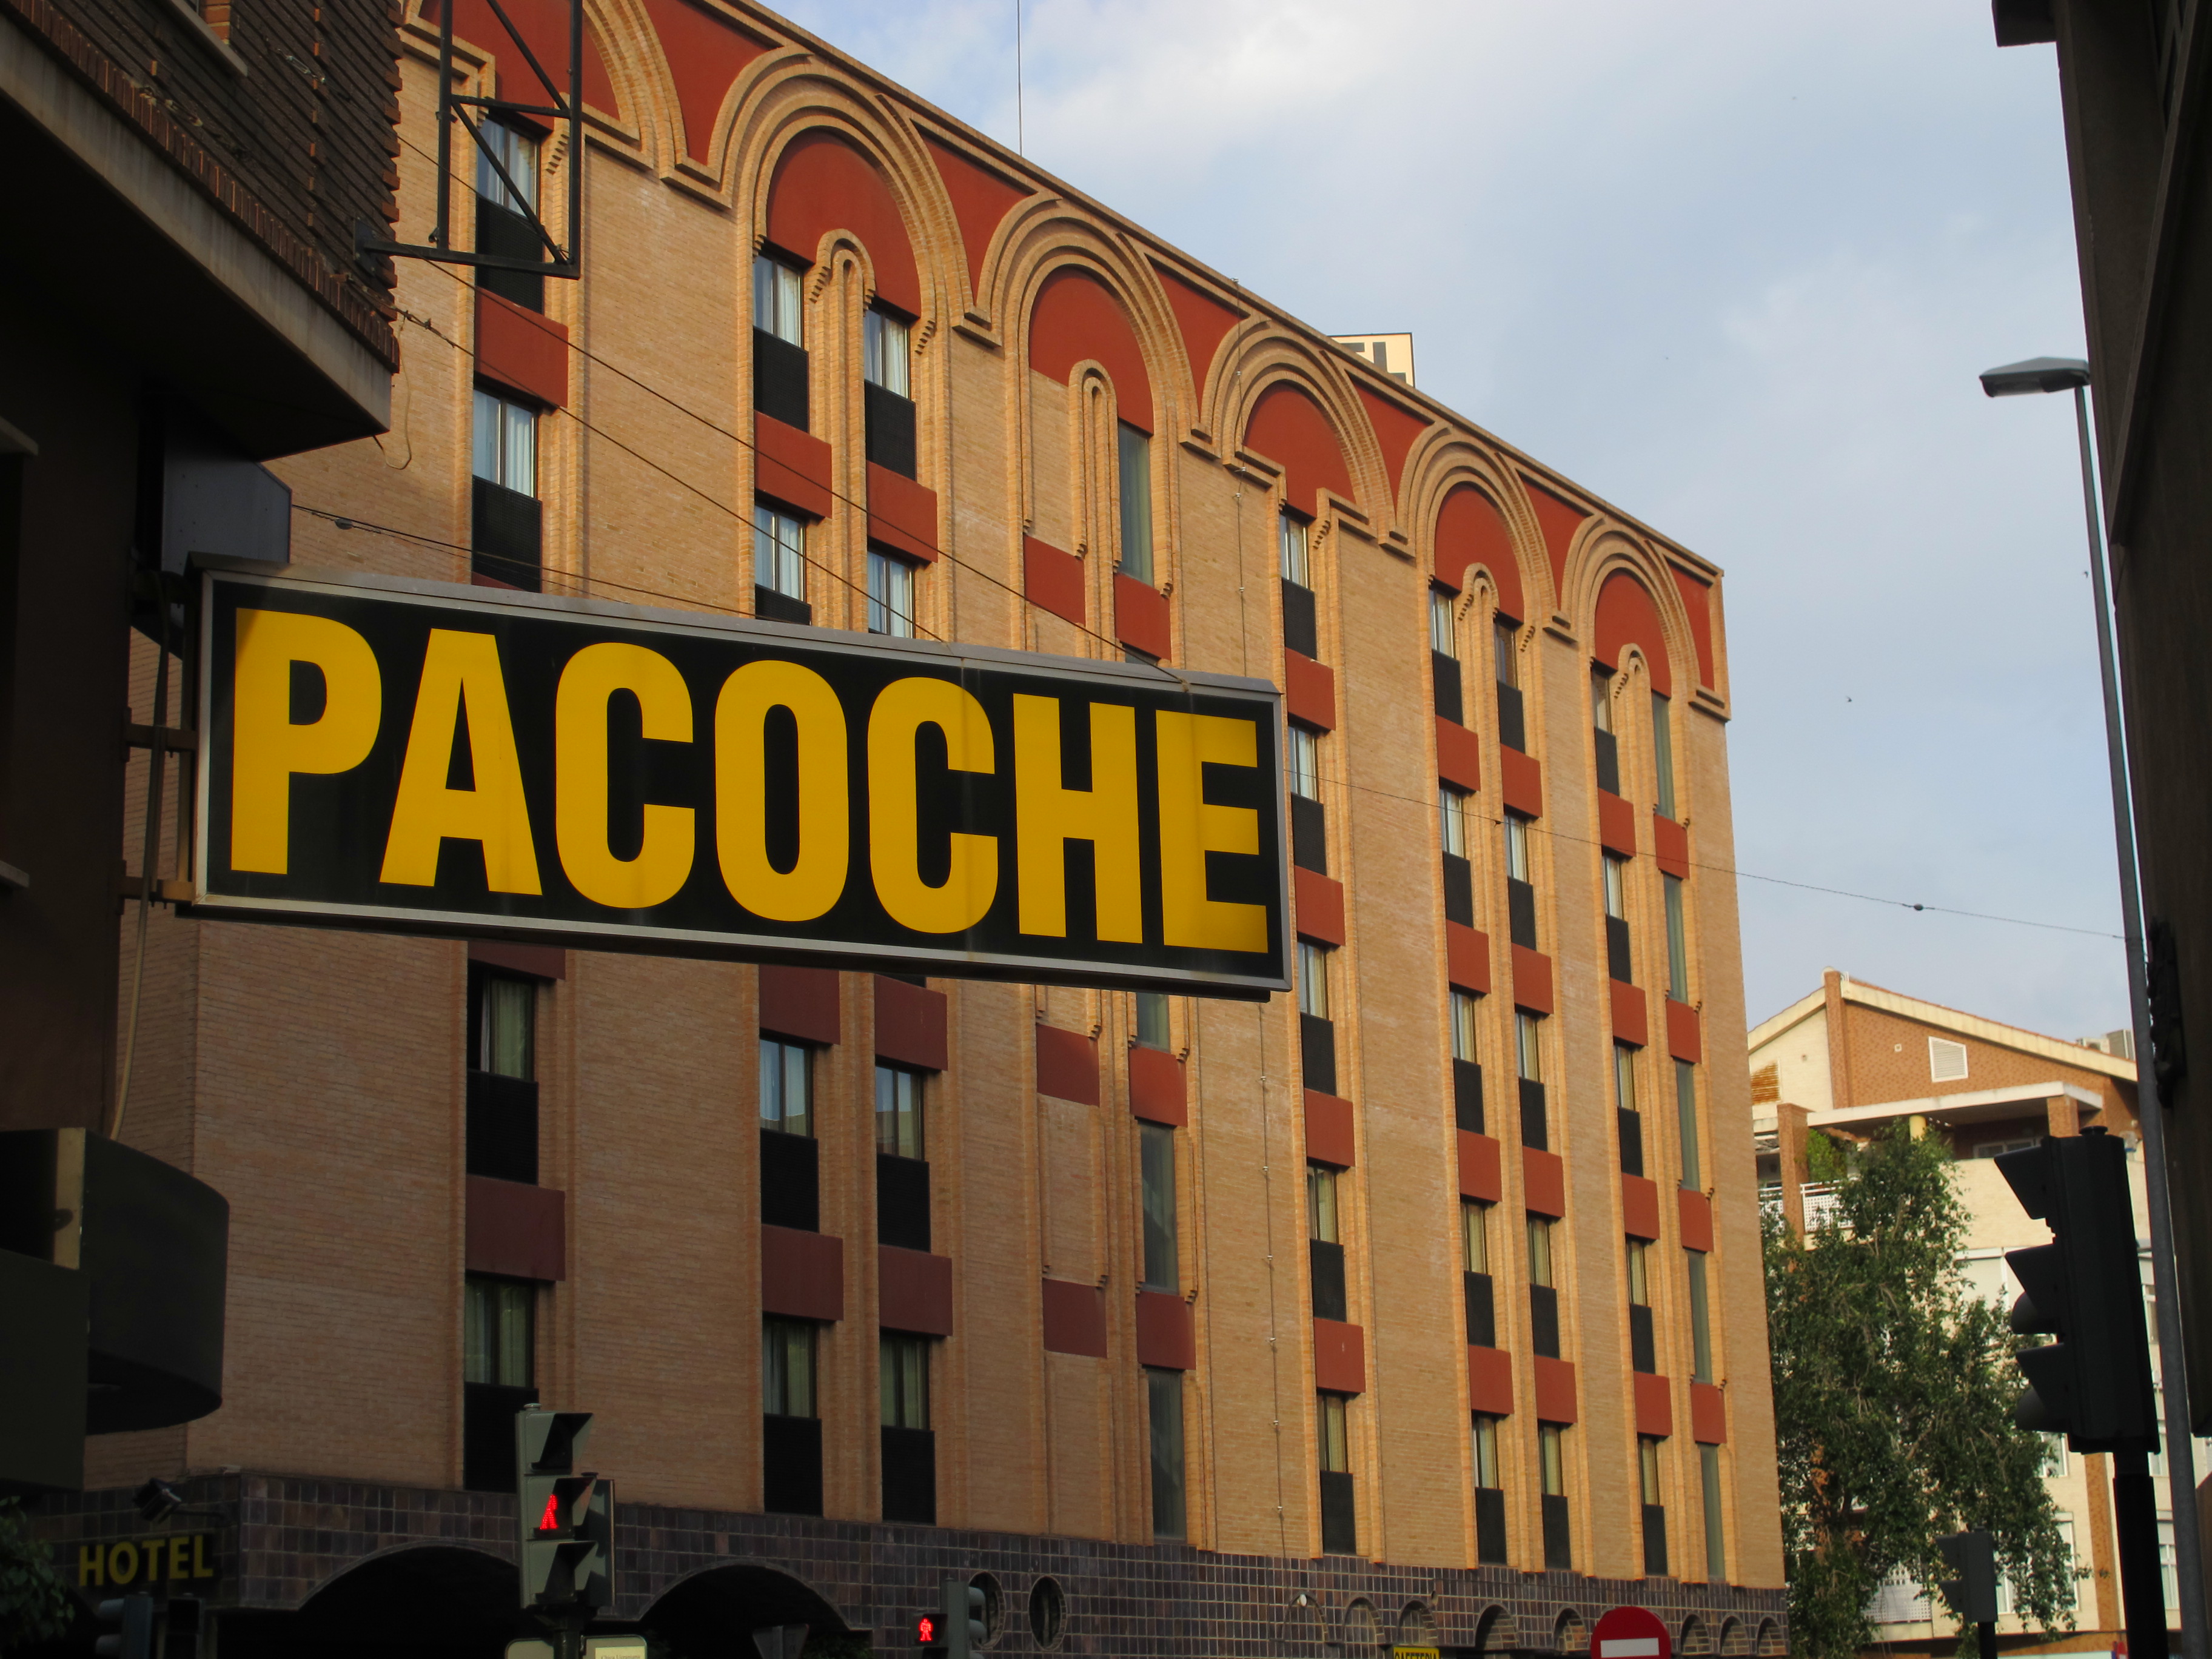 Hotel Pacoche